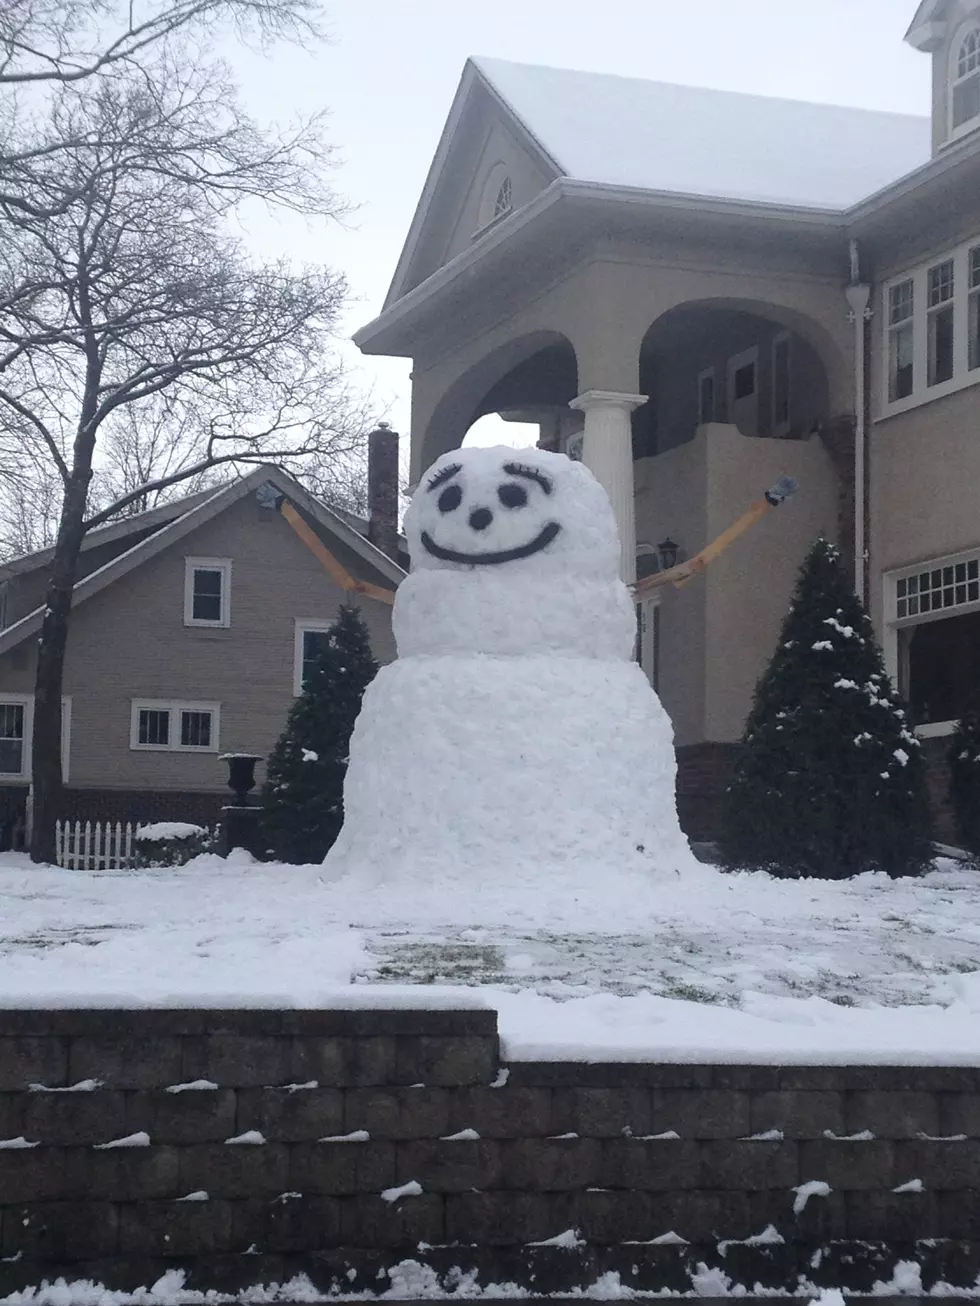 Faribault’s Giant Snowman Returns